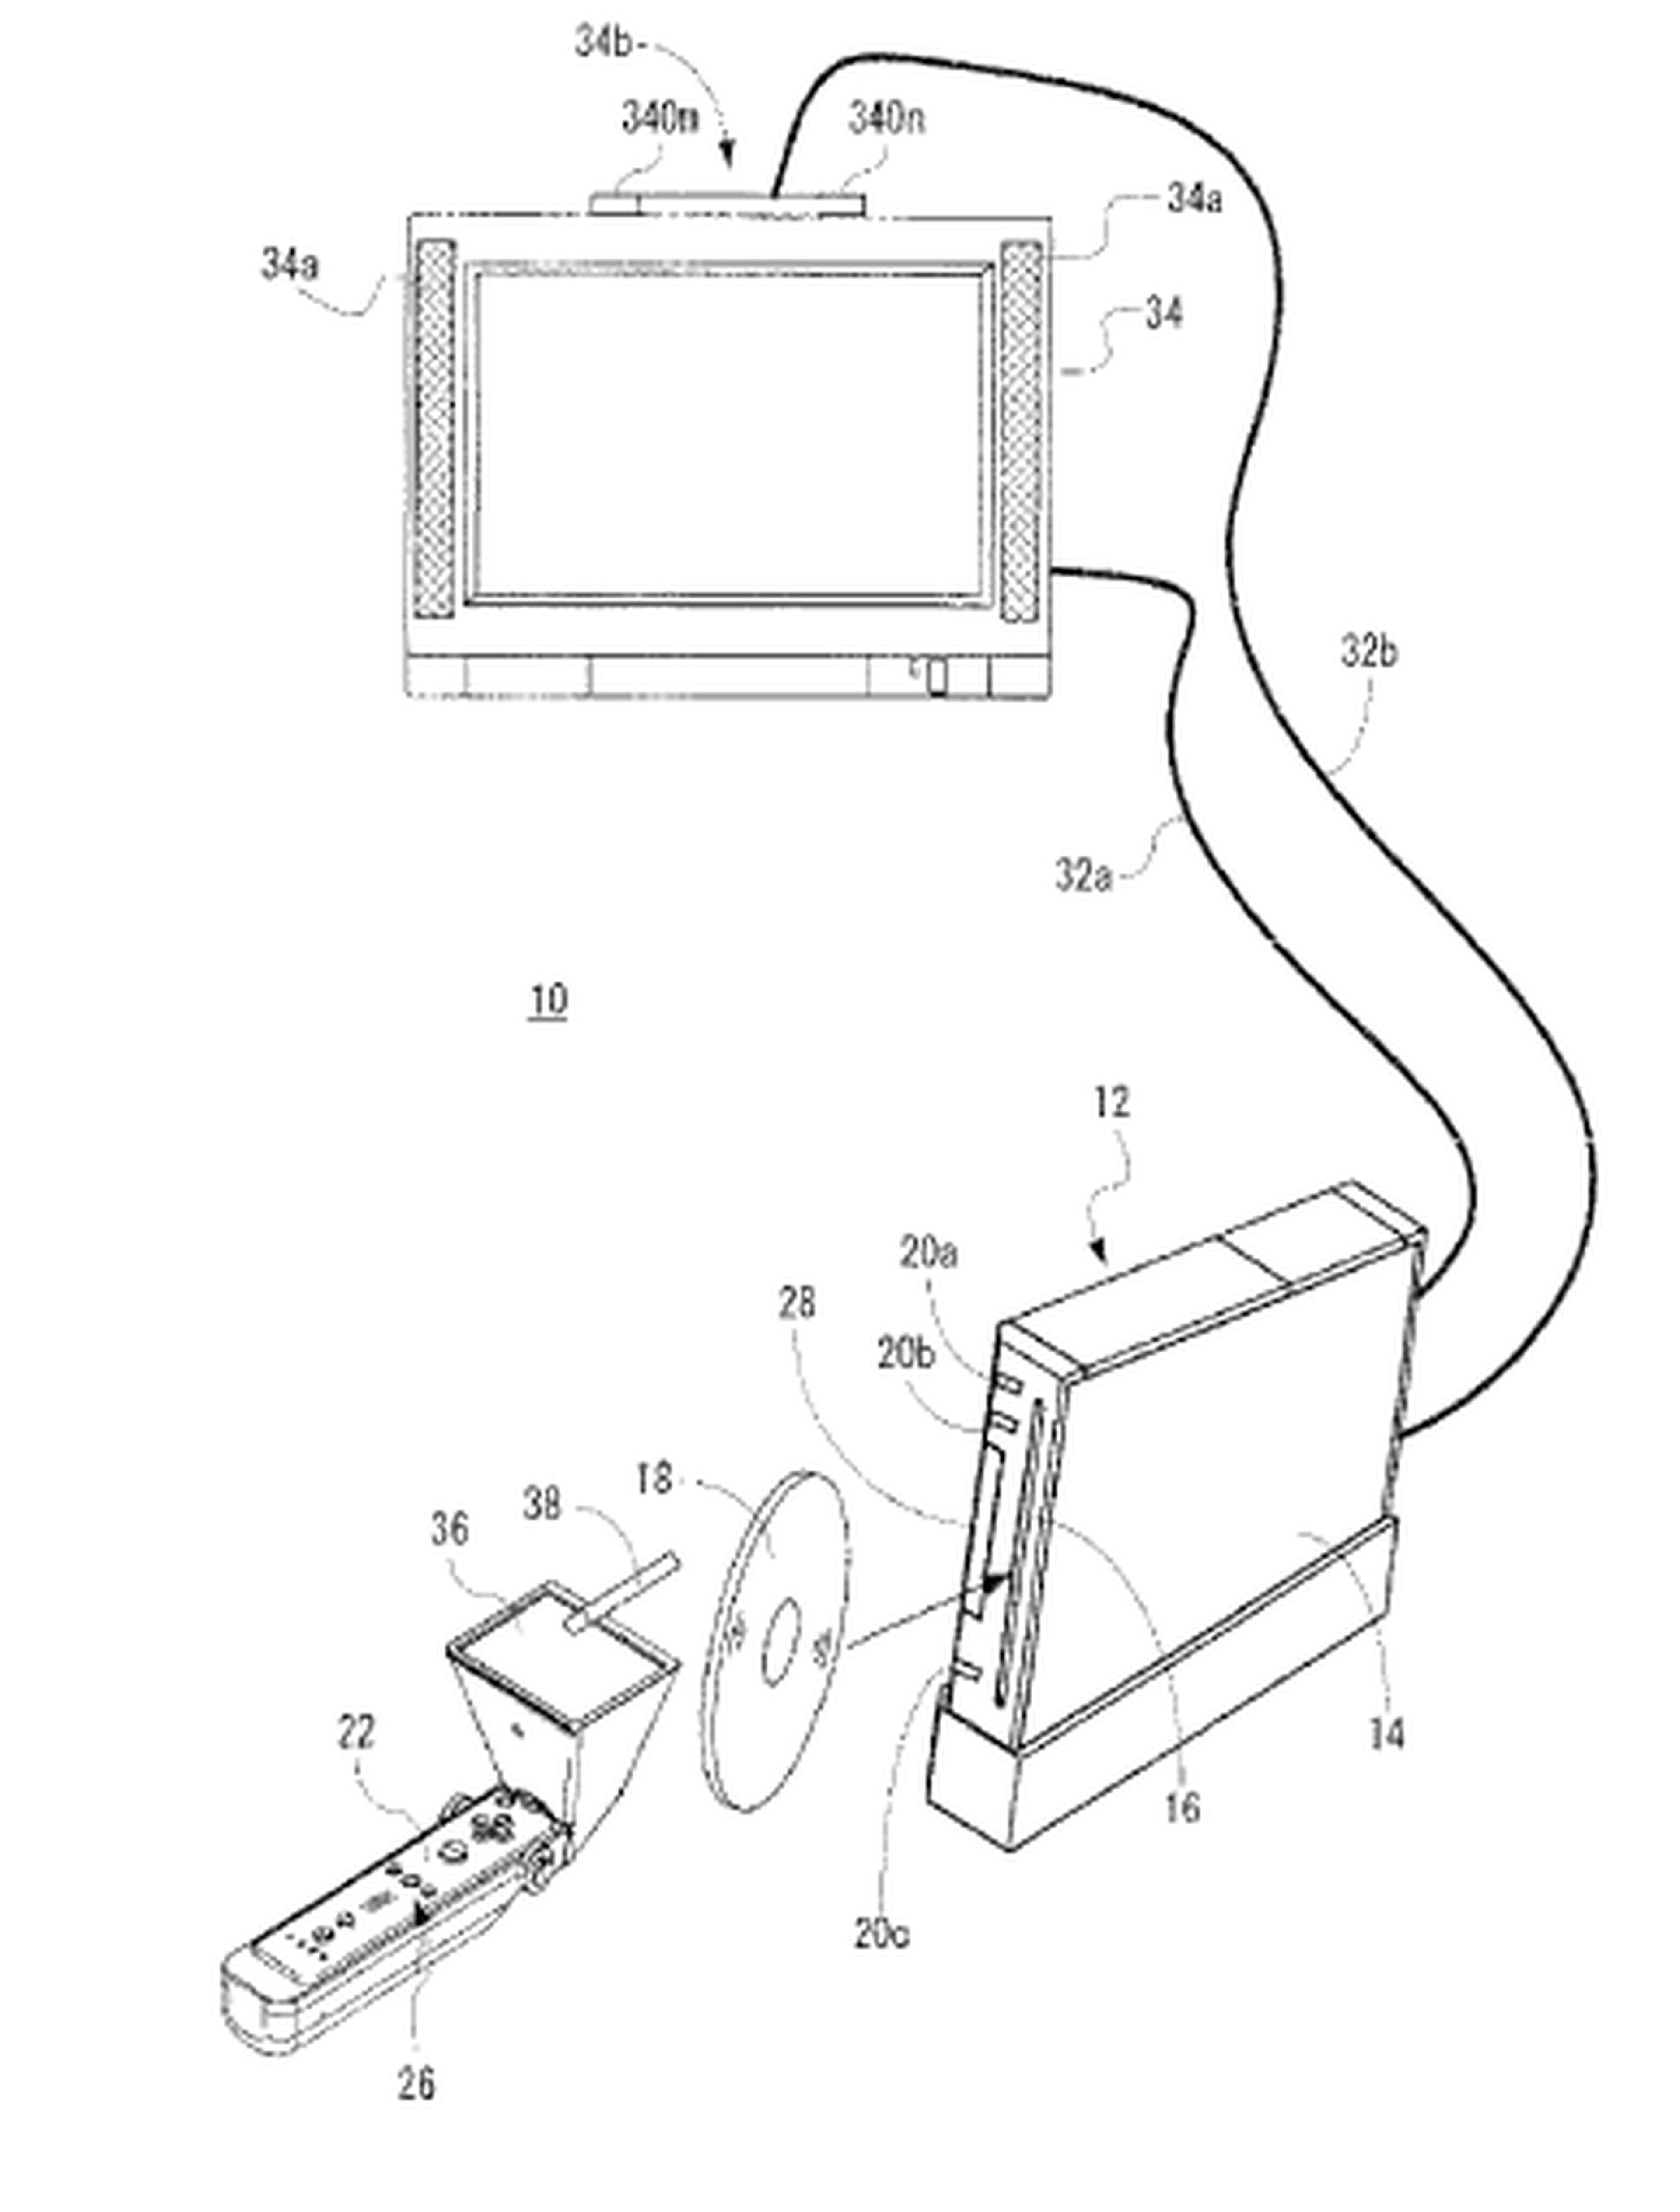 Nintendo patenta un touchpad para Wii